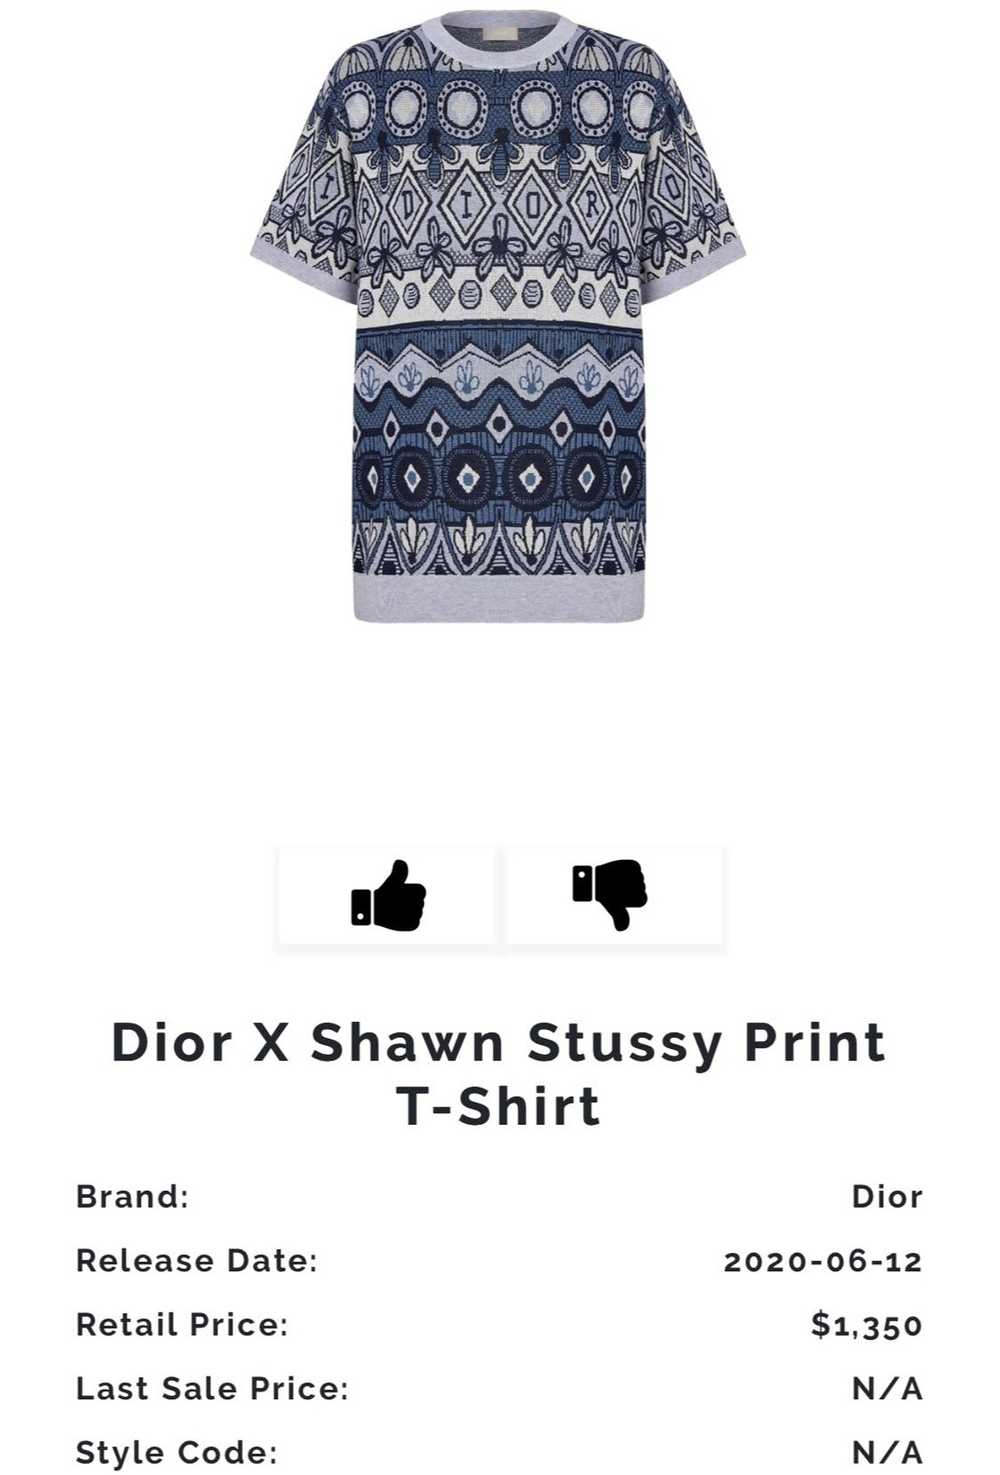 Dior × Stussy Dior X Shawn Stussy Print T-Shirt - image 1